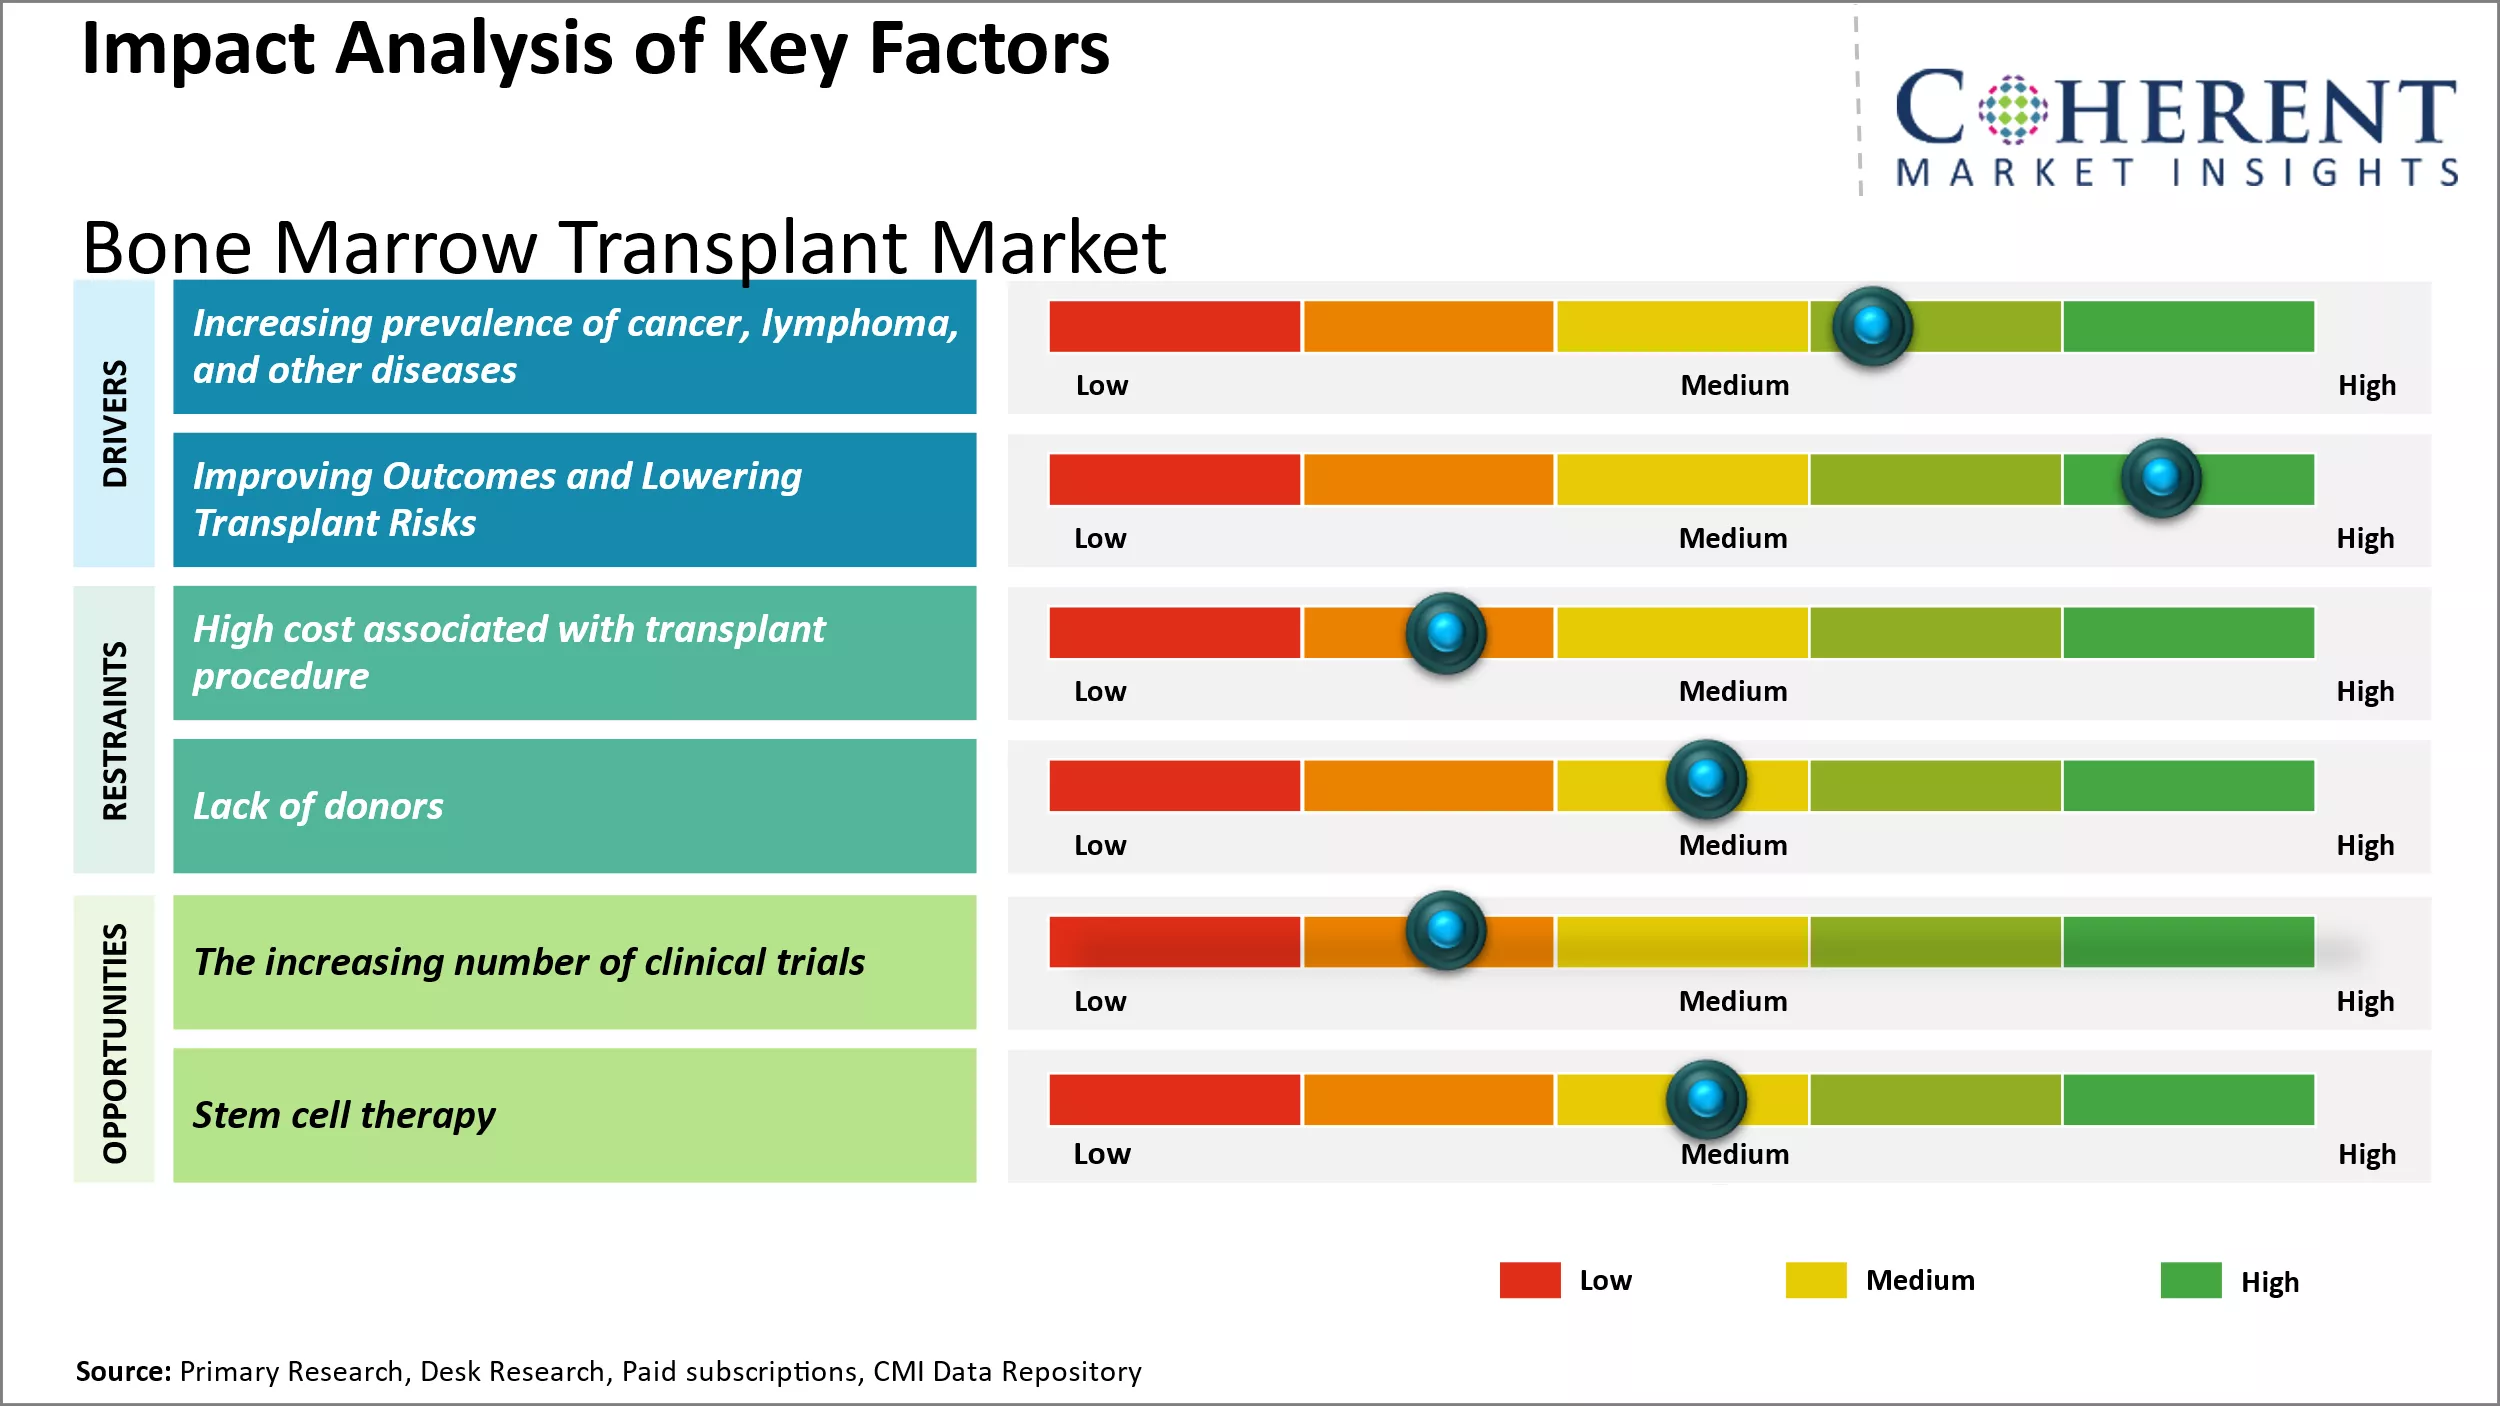 Bone Marrow Transplant Market Key Factors